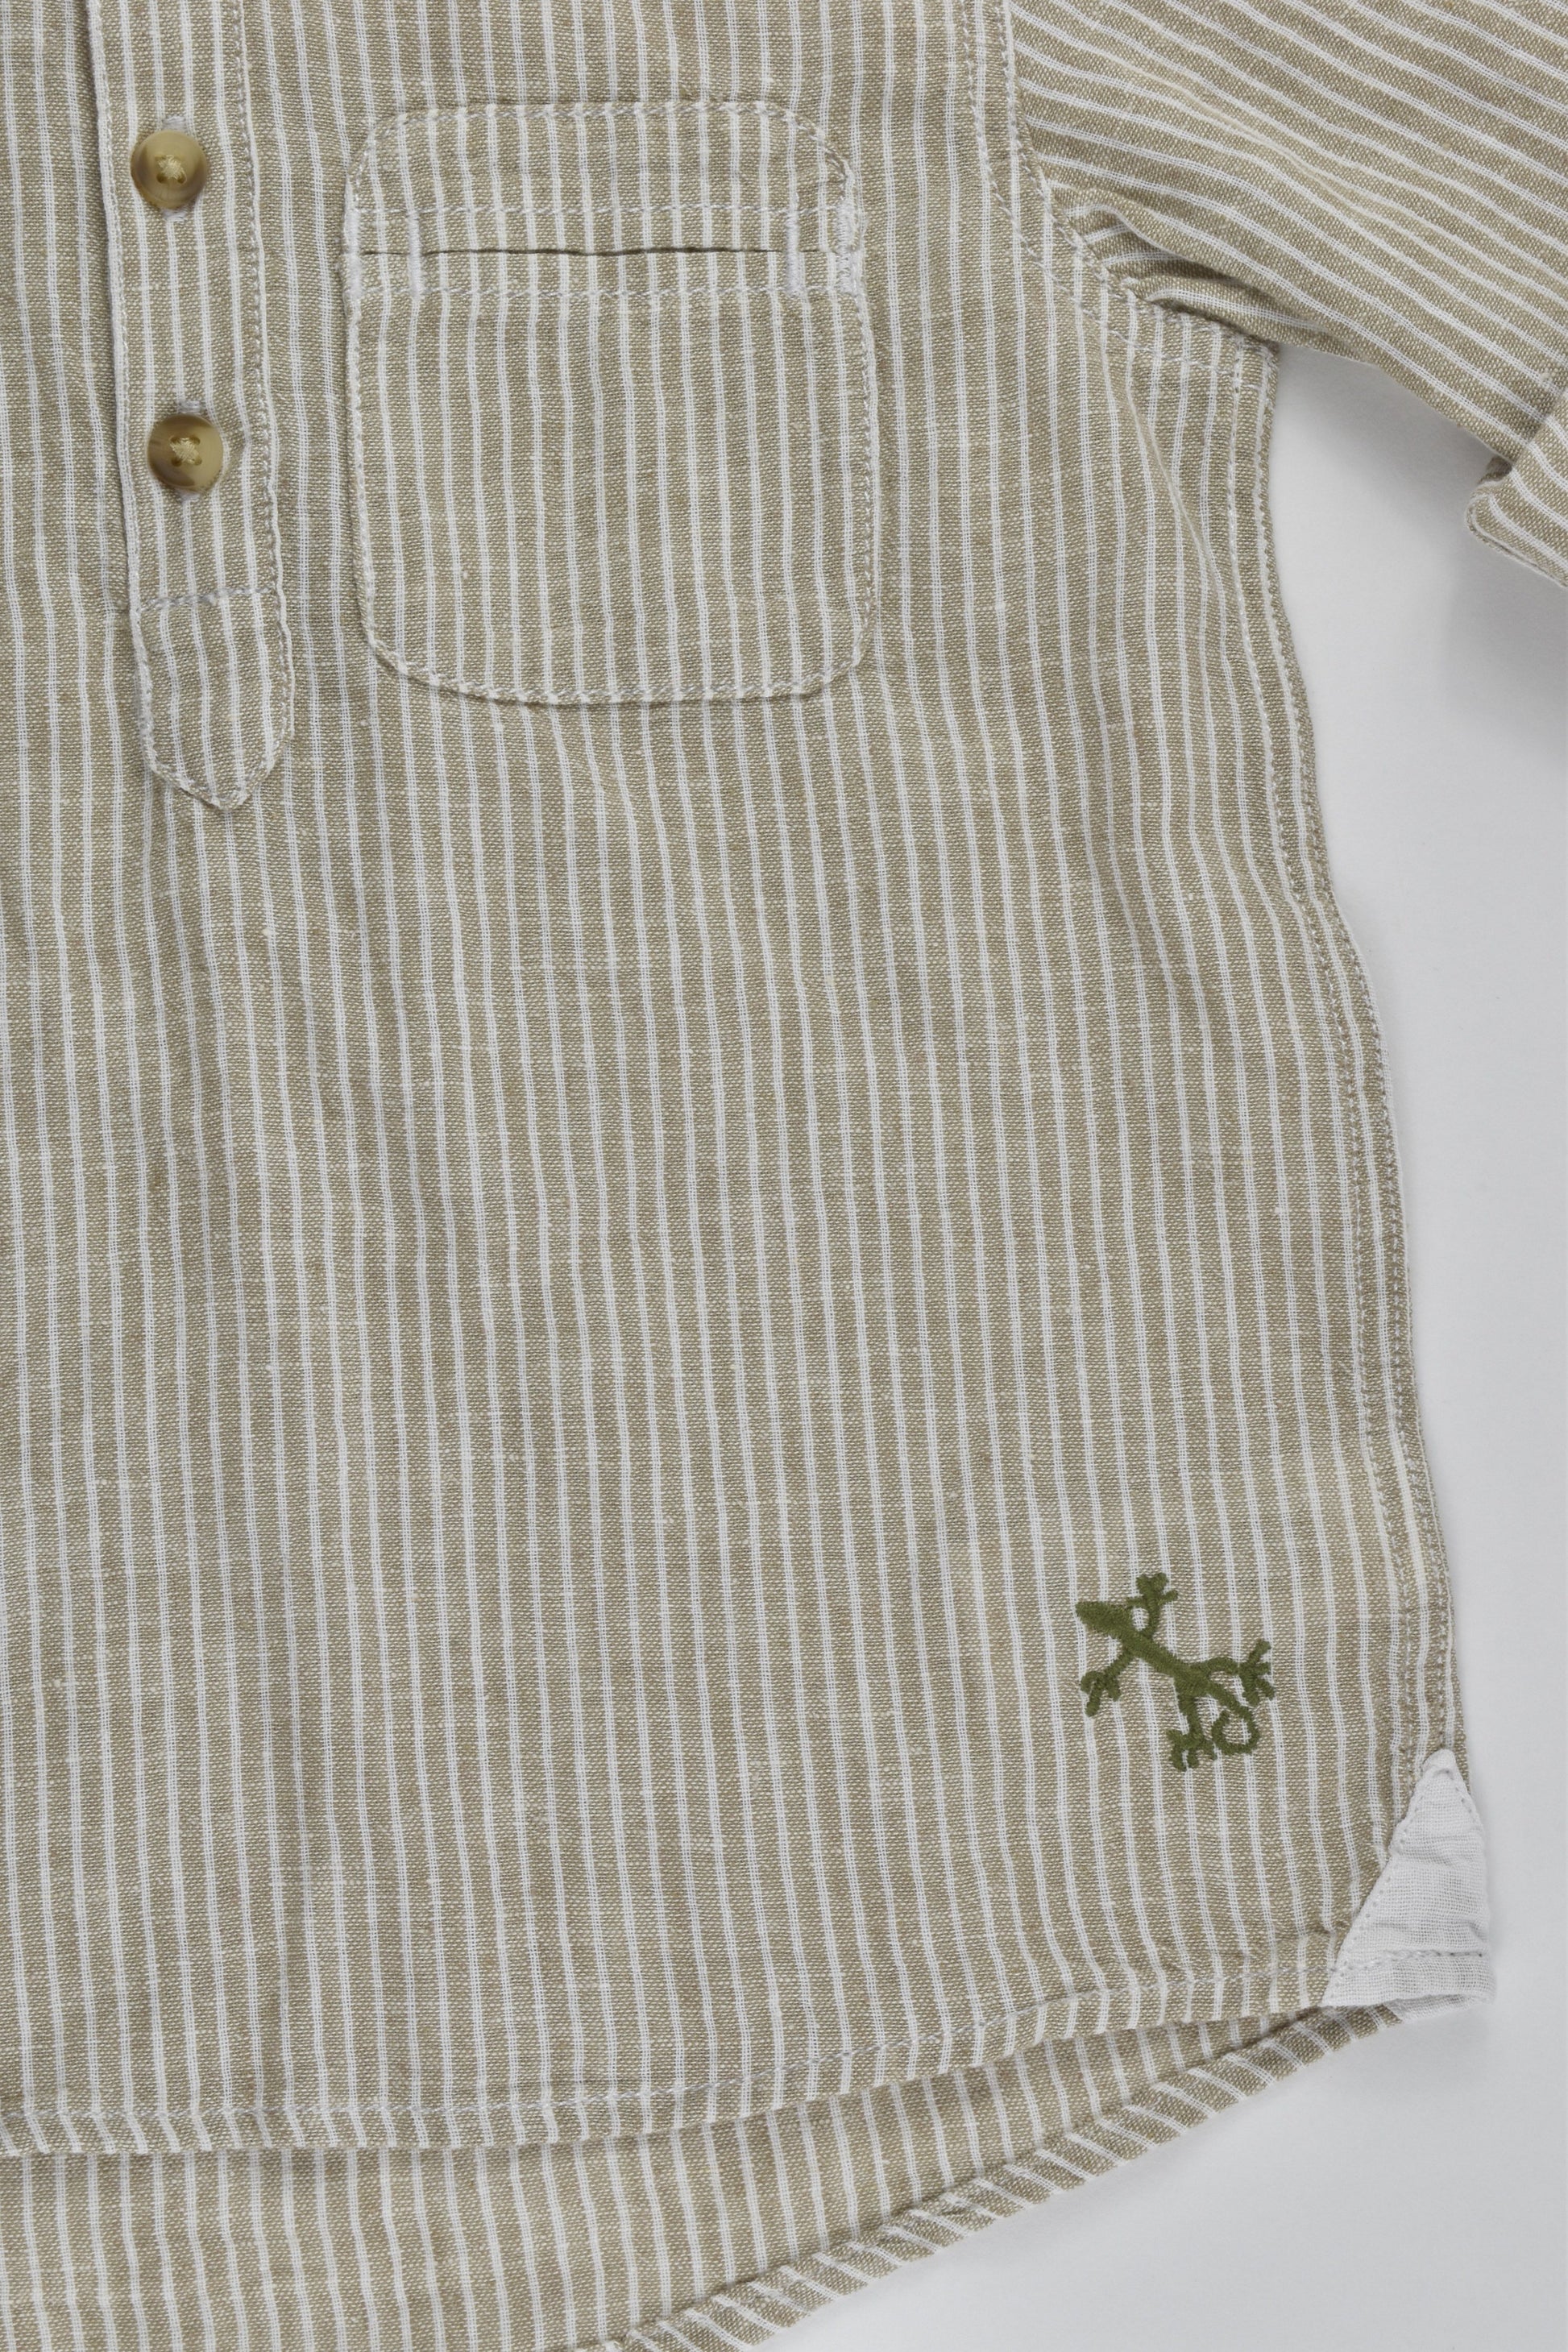 NEW Next Size 2 (92 cm) Linen/Cotton Shirt